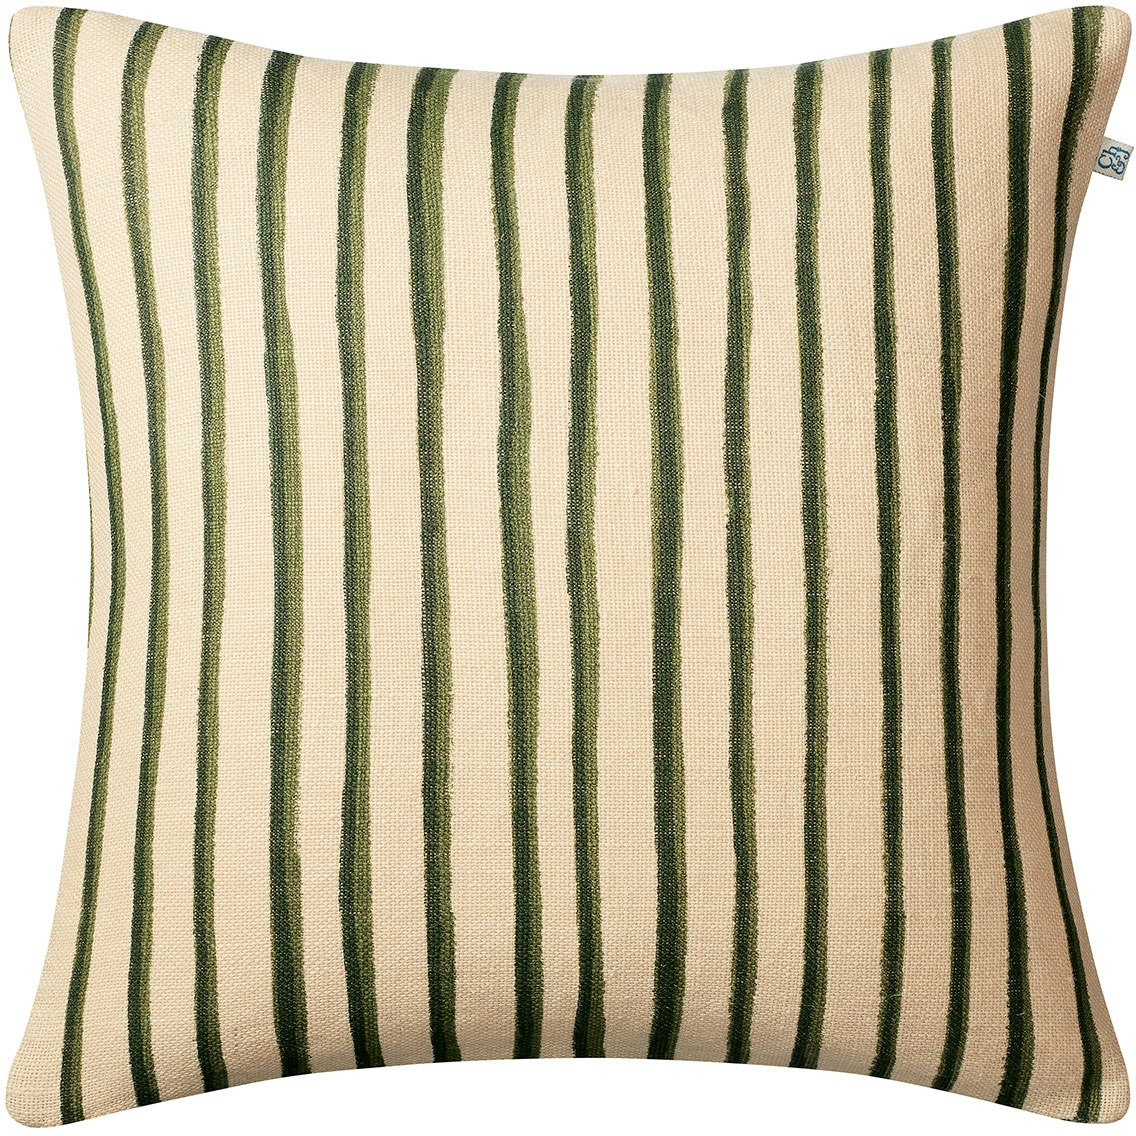 Jaipur Stripe Putetrekk 50x50 cm, Light Beige / Cactus Green / Green